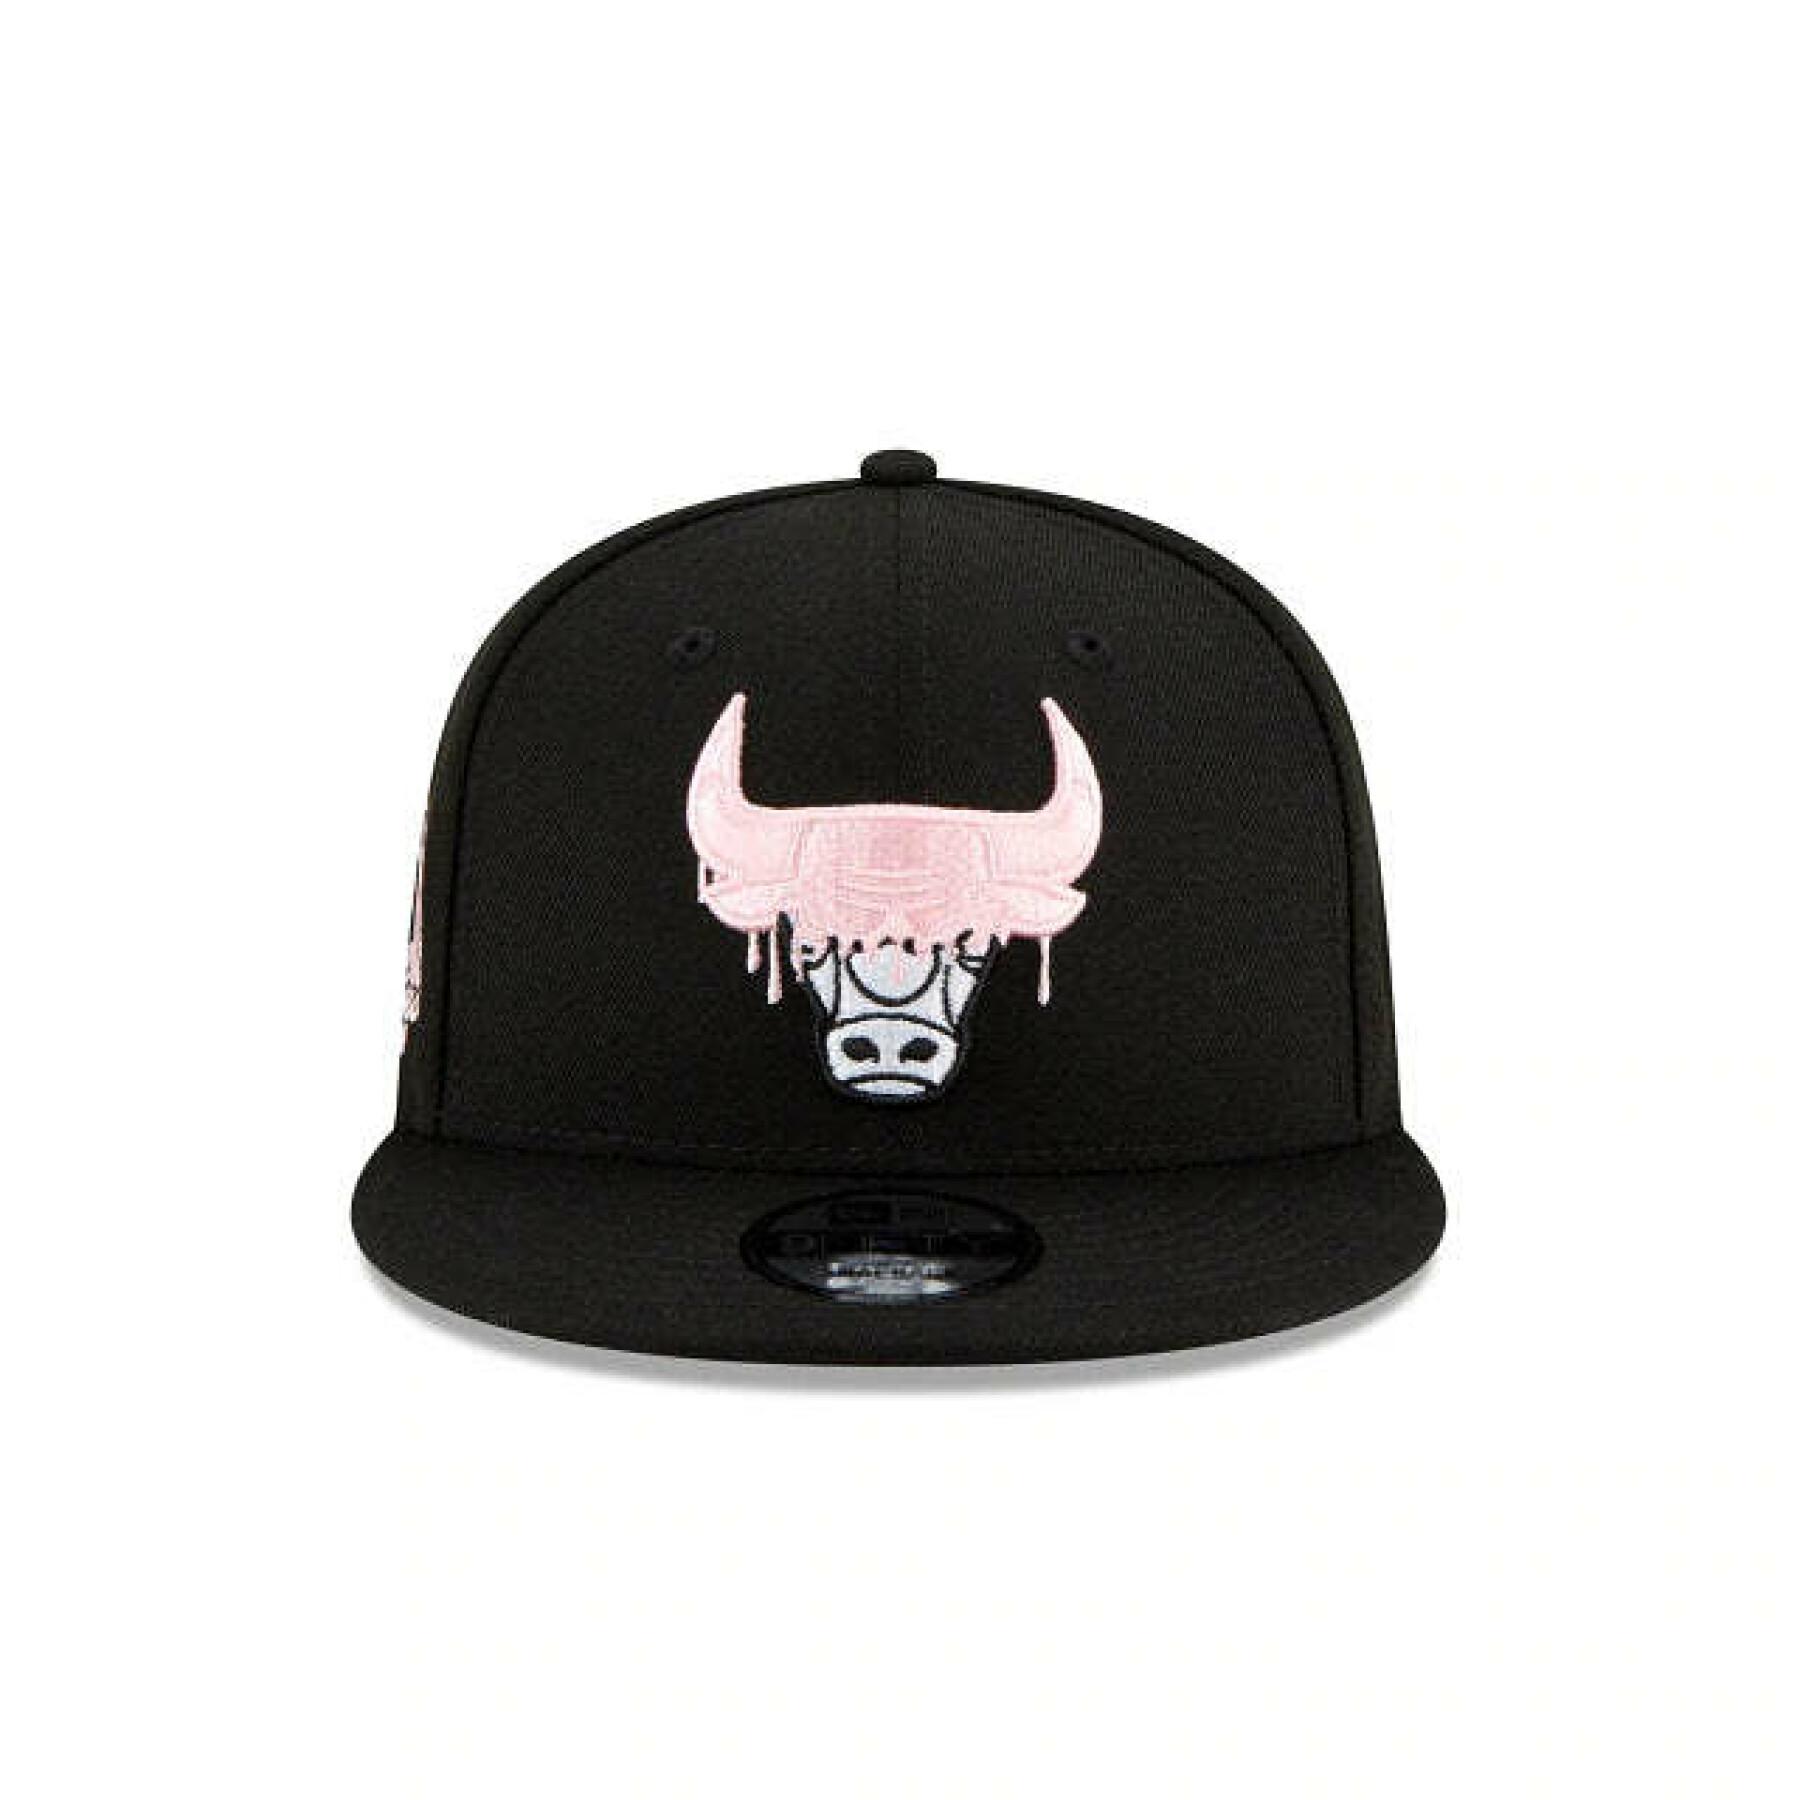 Cappello 9fifty New Era drip Chicago Bulls